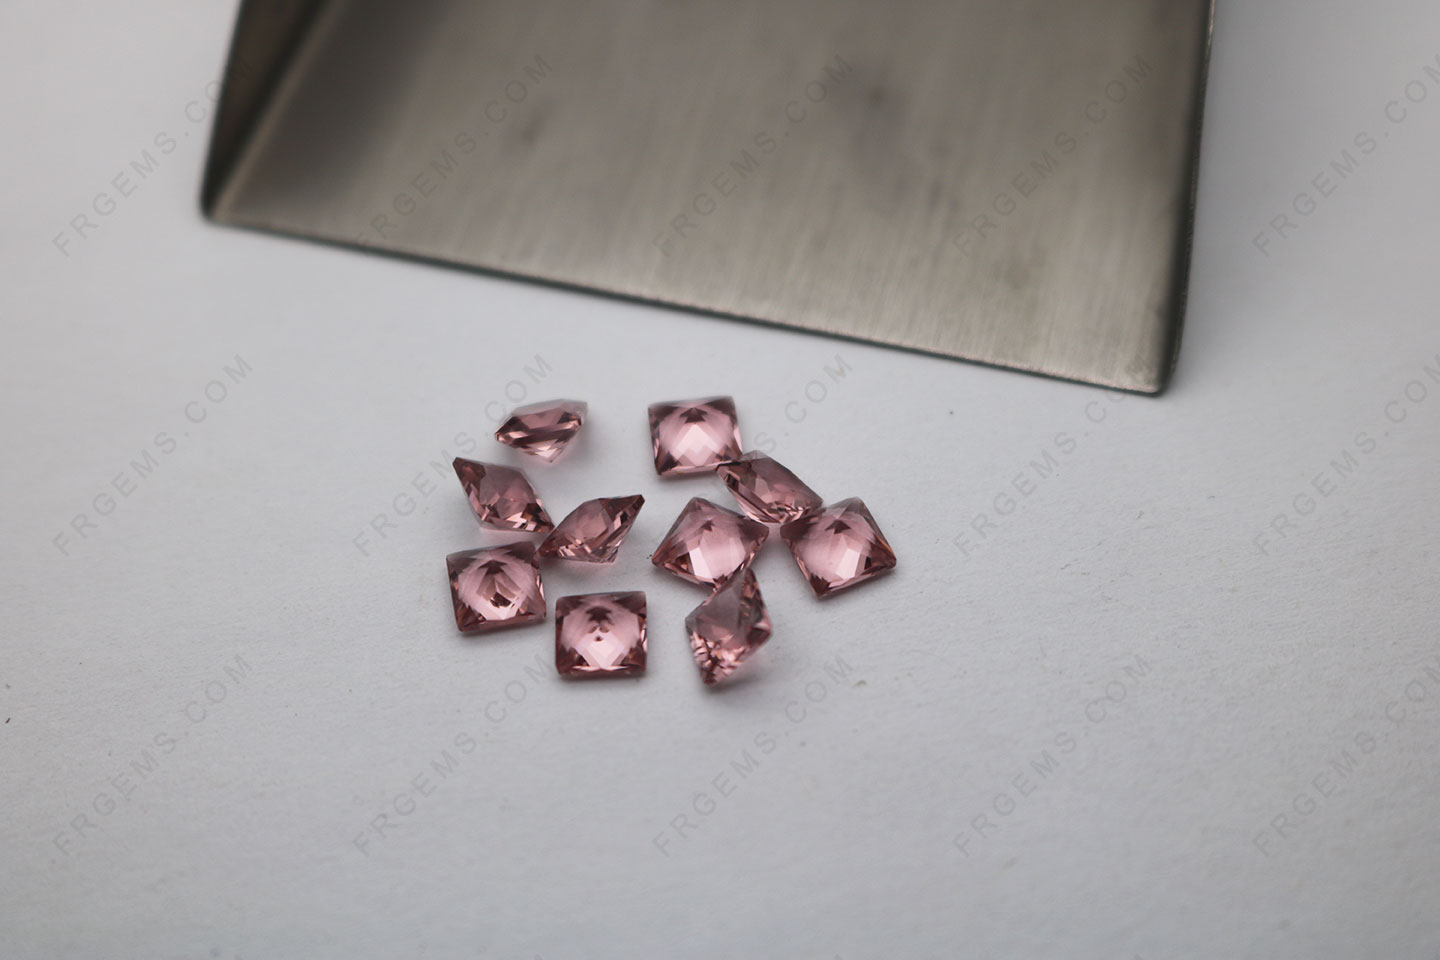 Loose Nano Crystal Morganite Peach pink 182# color Square Princess cut 5x5mm gemstones